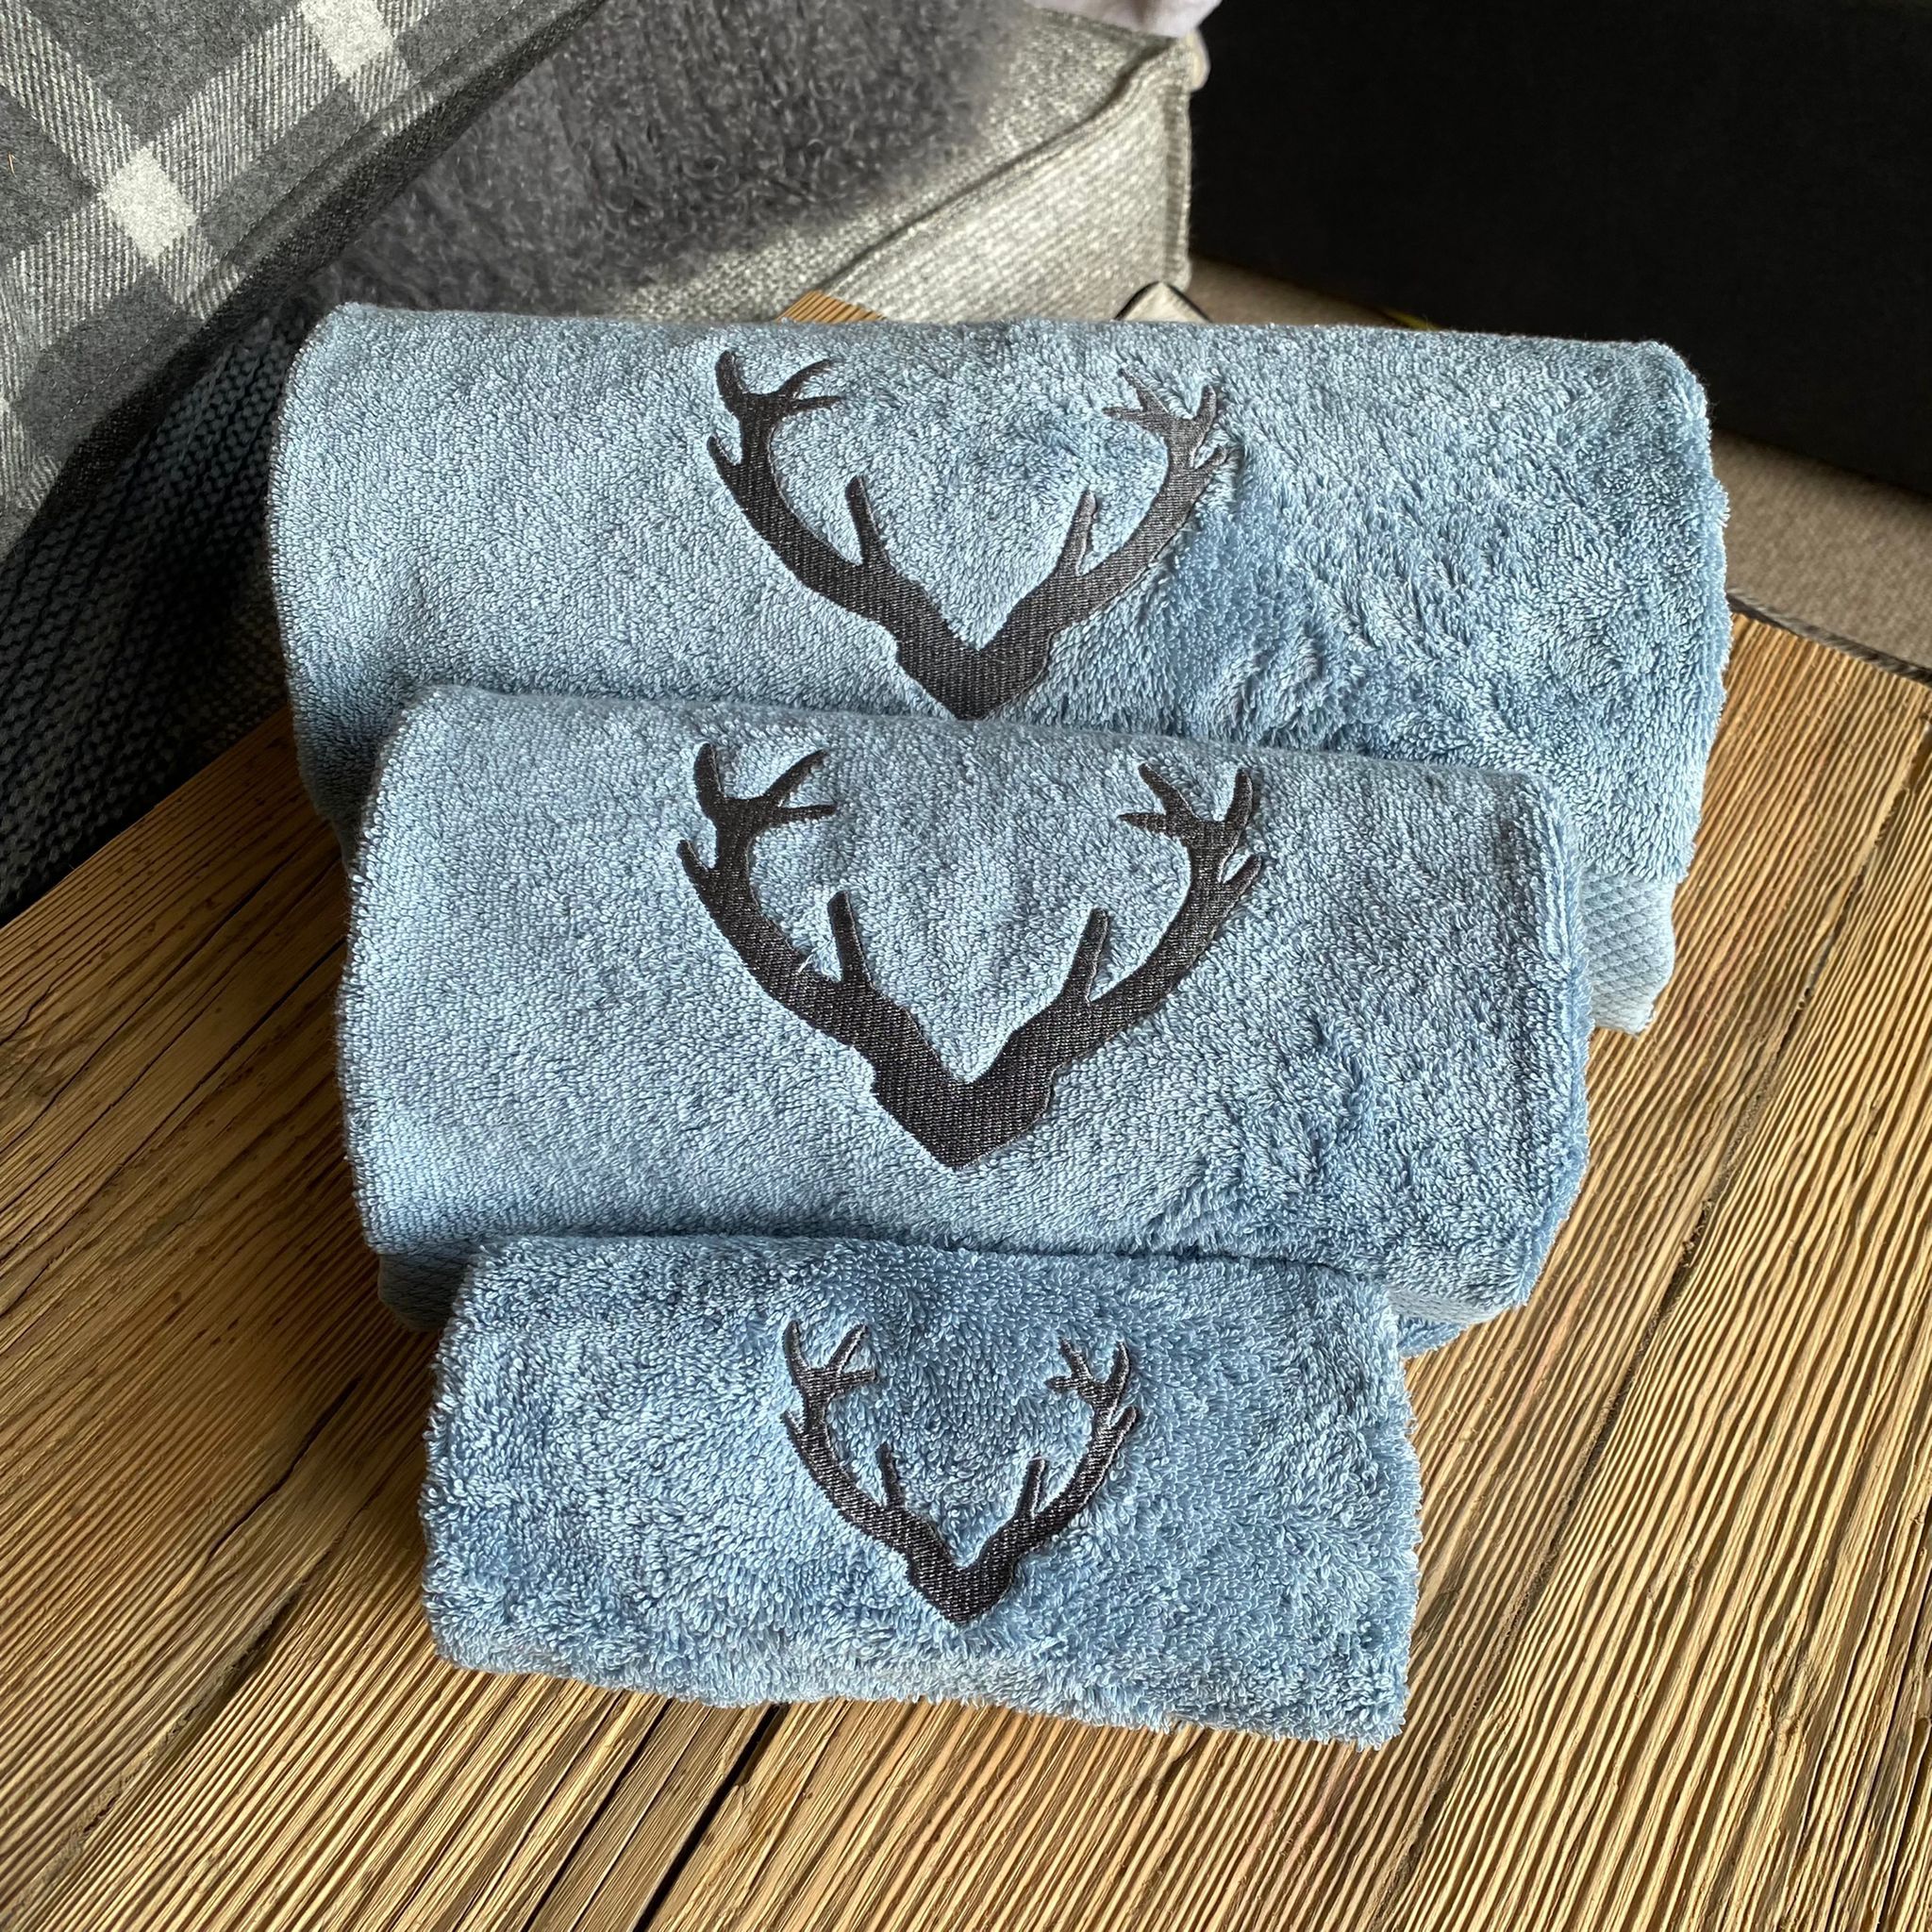 Asciugamani da montagna - set 3 pezzi Isere azzurro polvere